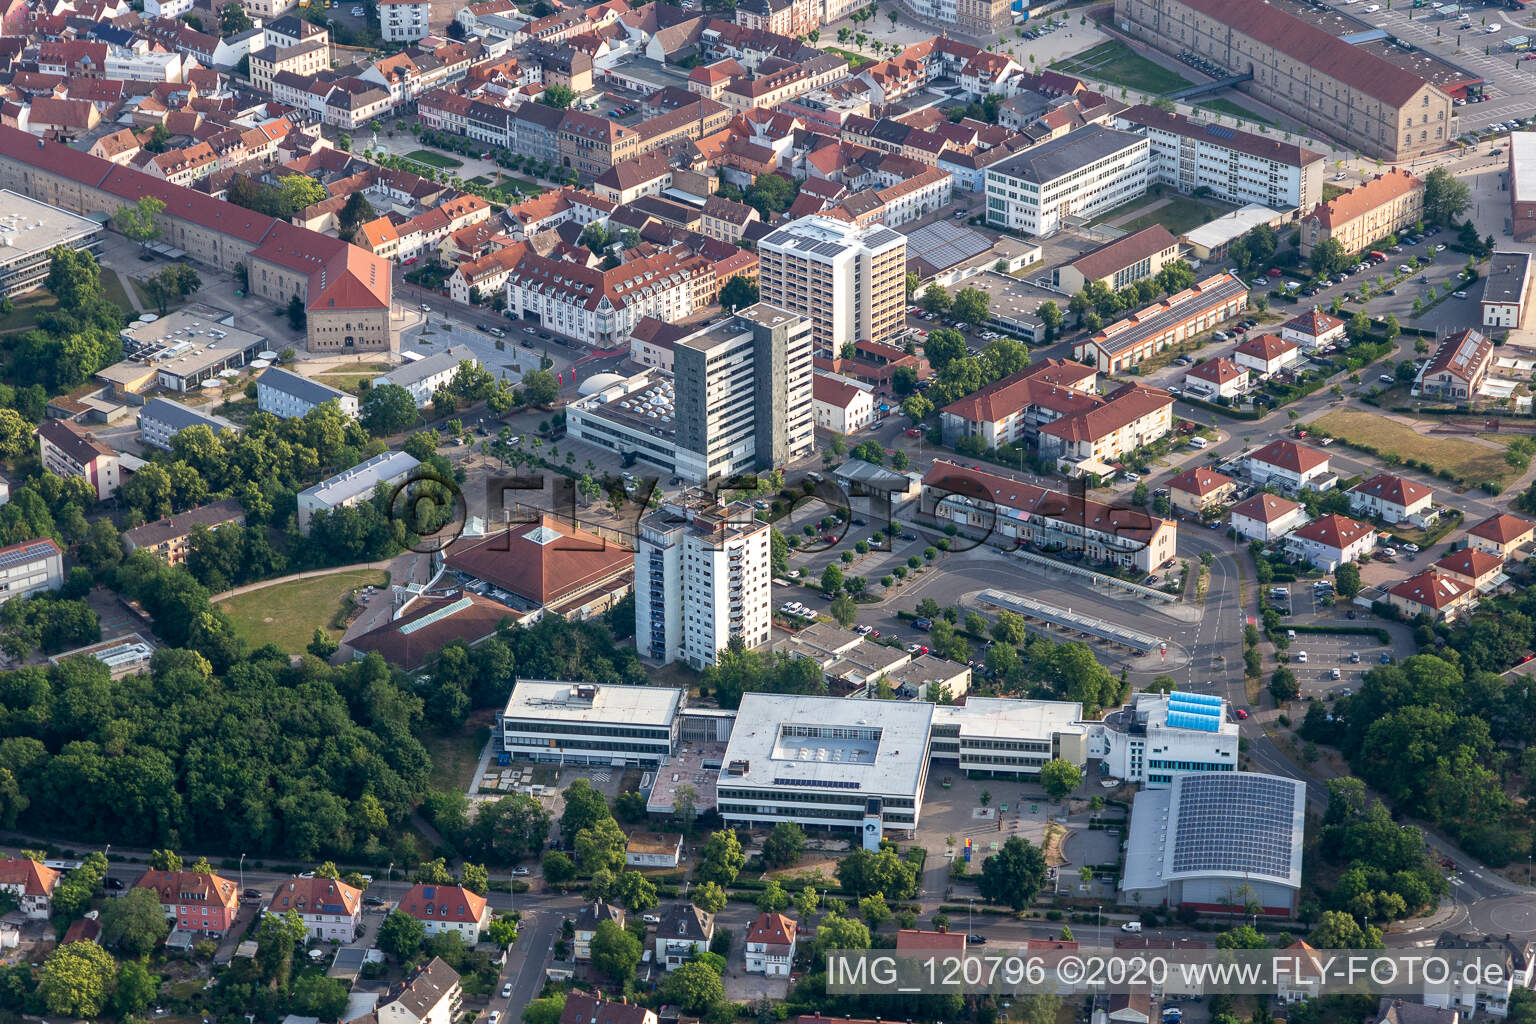 Goethe High School in Germersheim in the state Rhineland-Palatinate, Germany